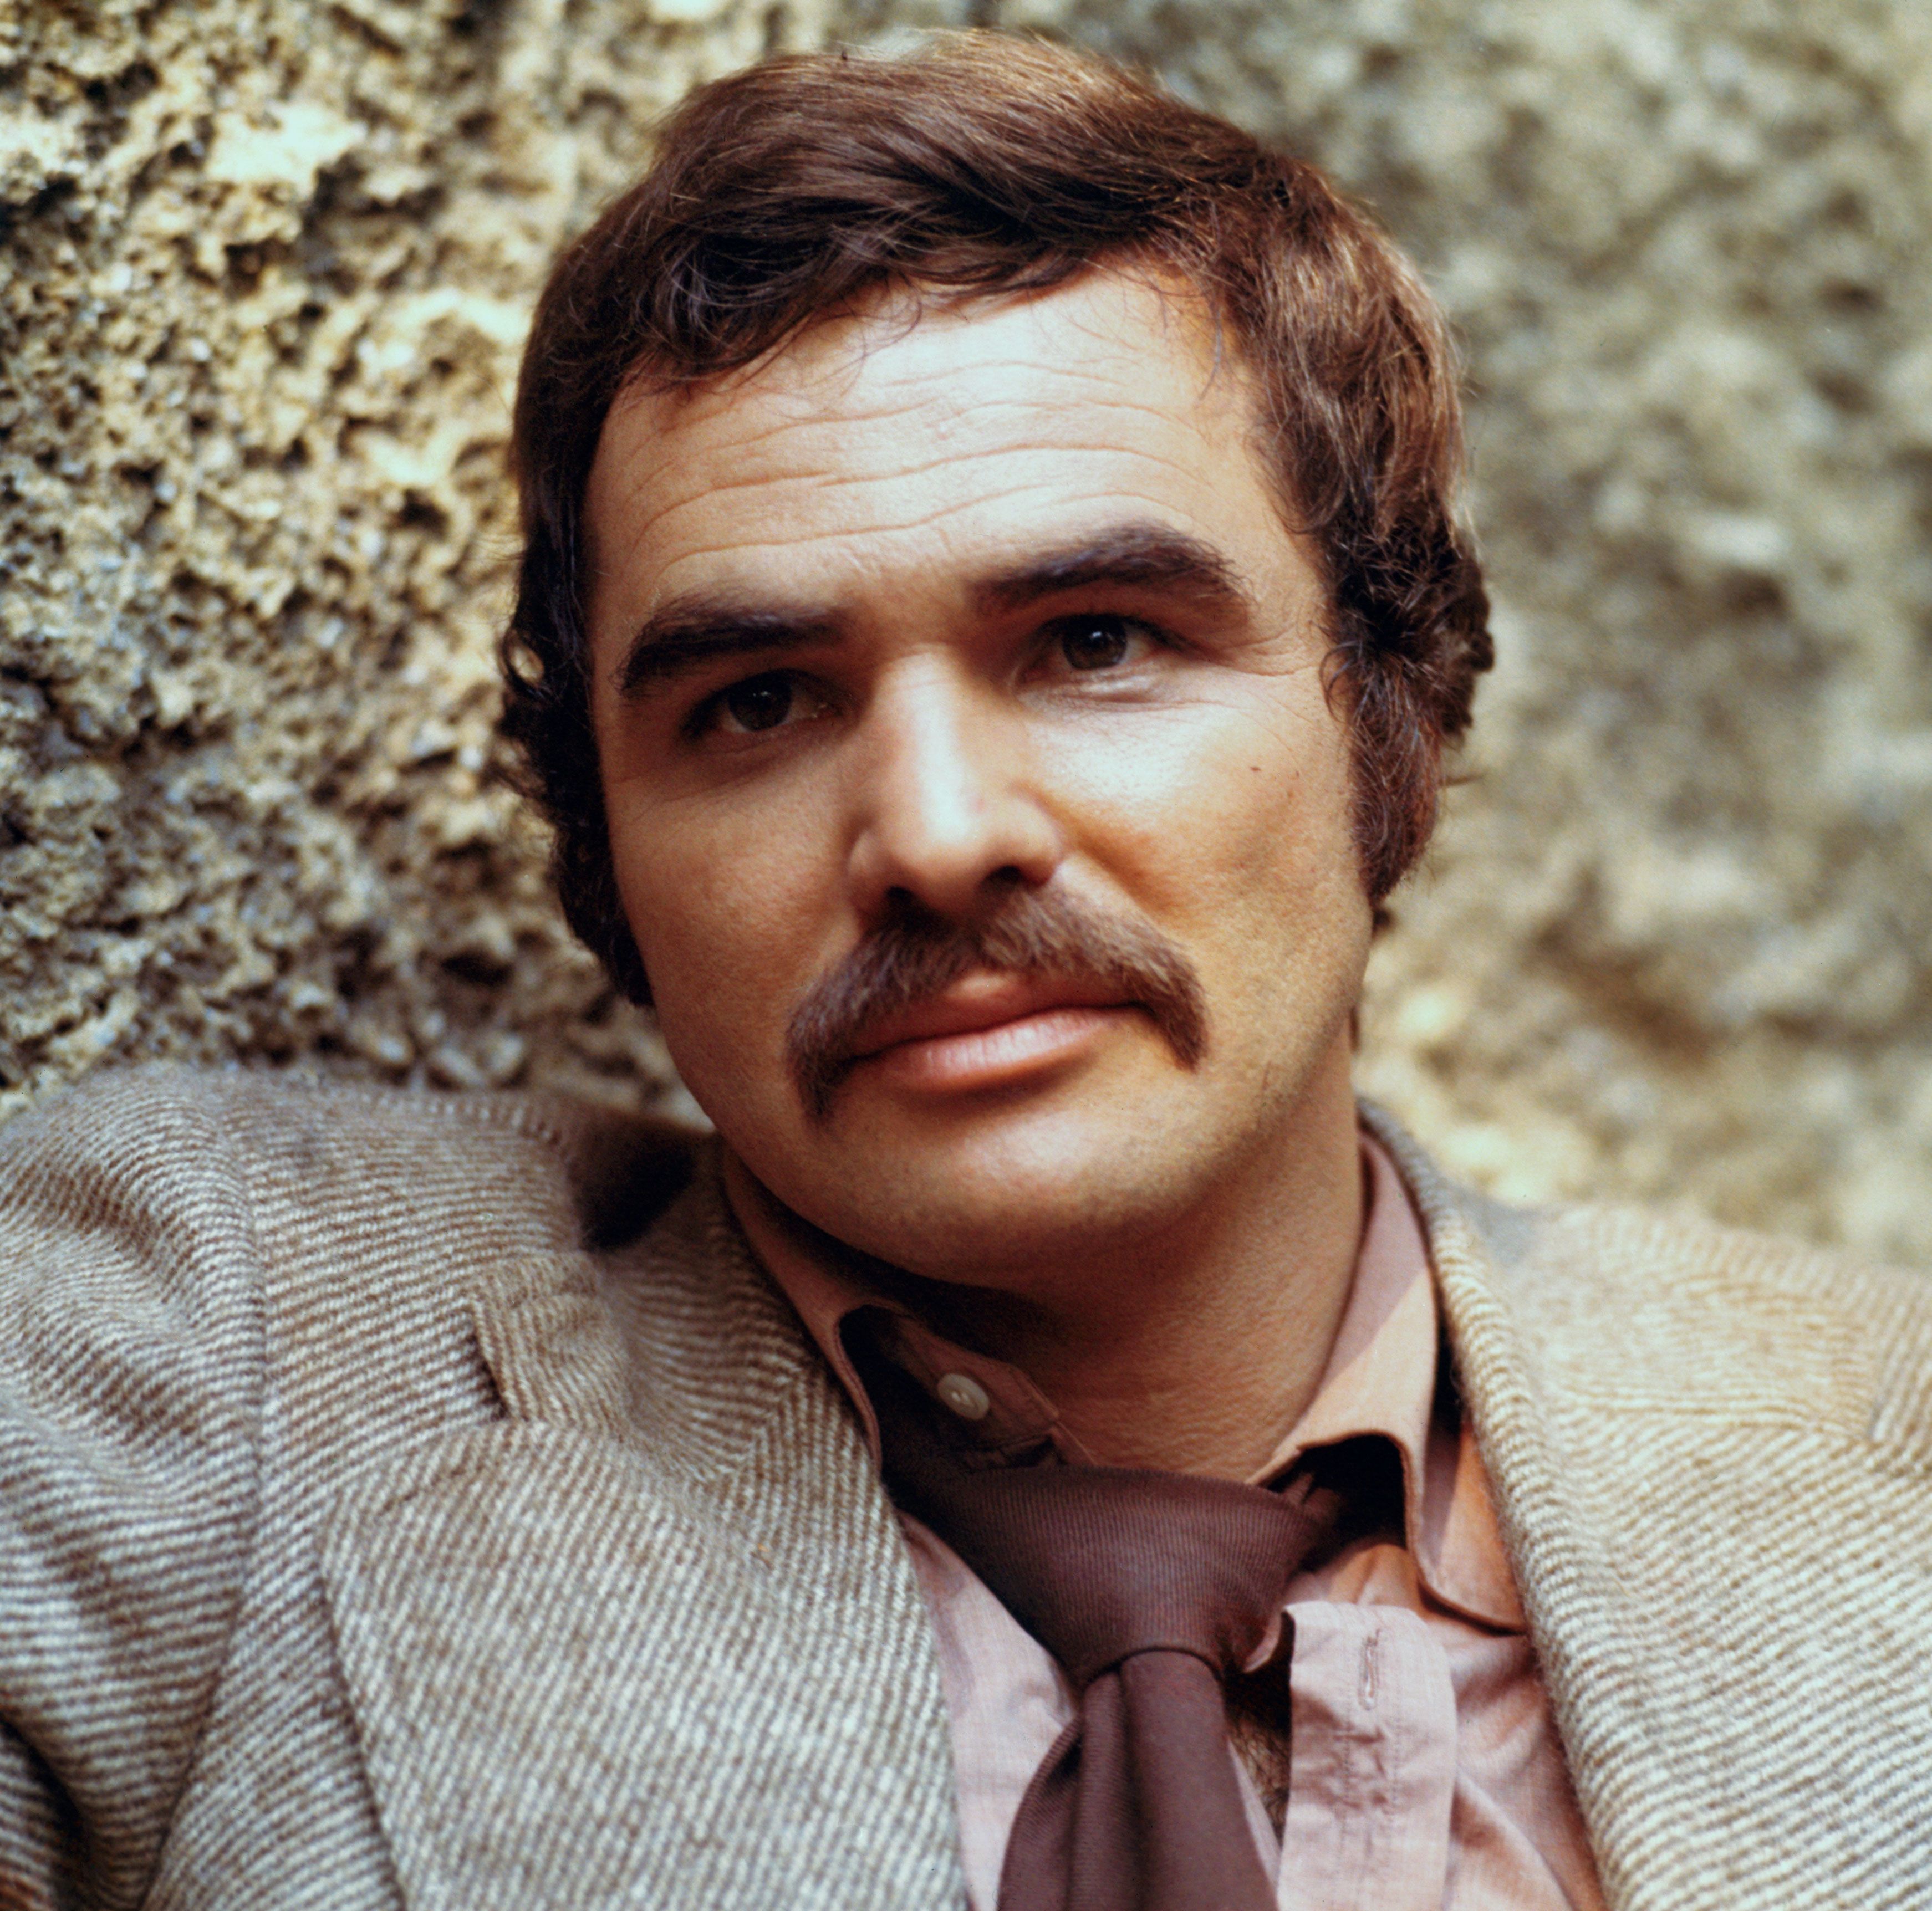 70s Porn Man - Burt Reynolds, 1970s Leading Man, Dies at 82